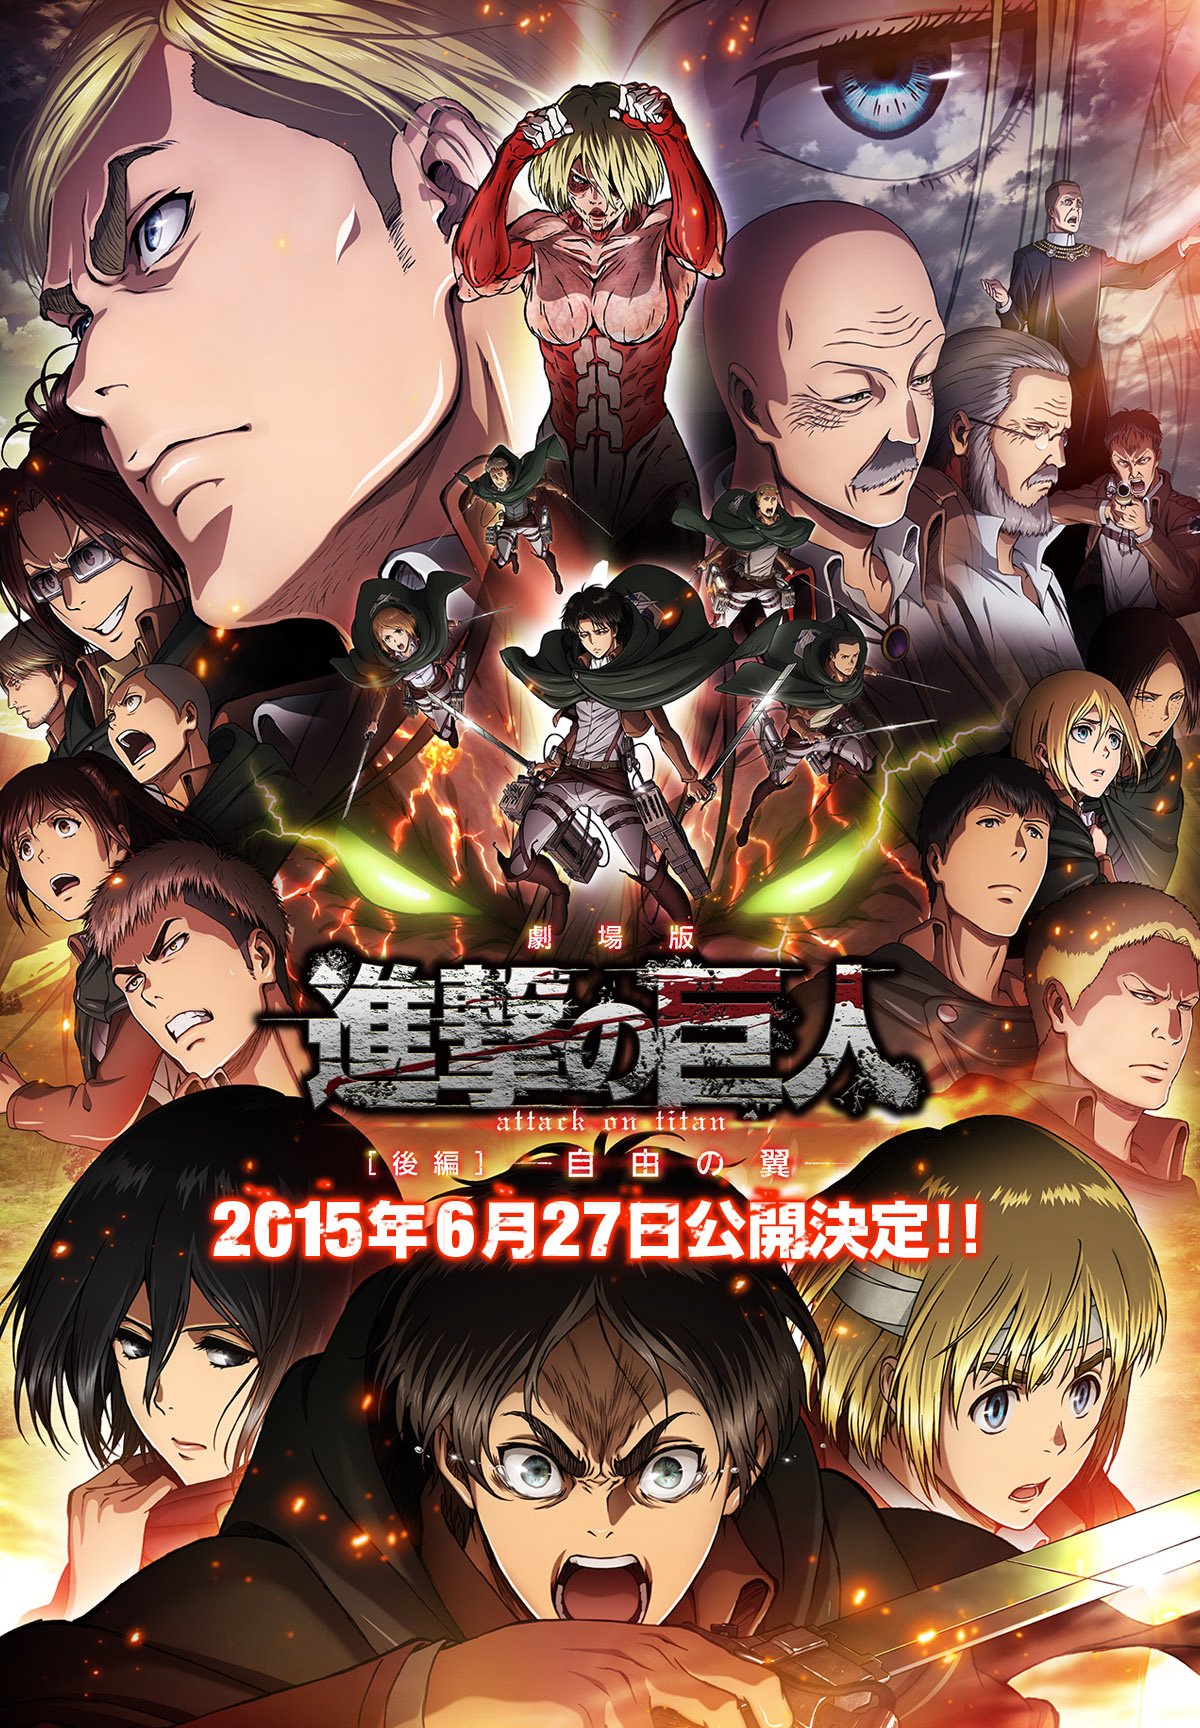 New Key Visual for the 2nd Attack on Titan Movie haruhichan.com 2nd shingeki no kyojin movie visual